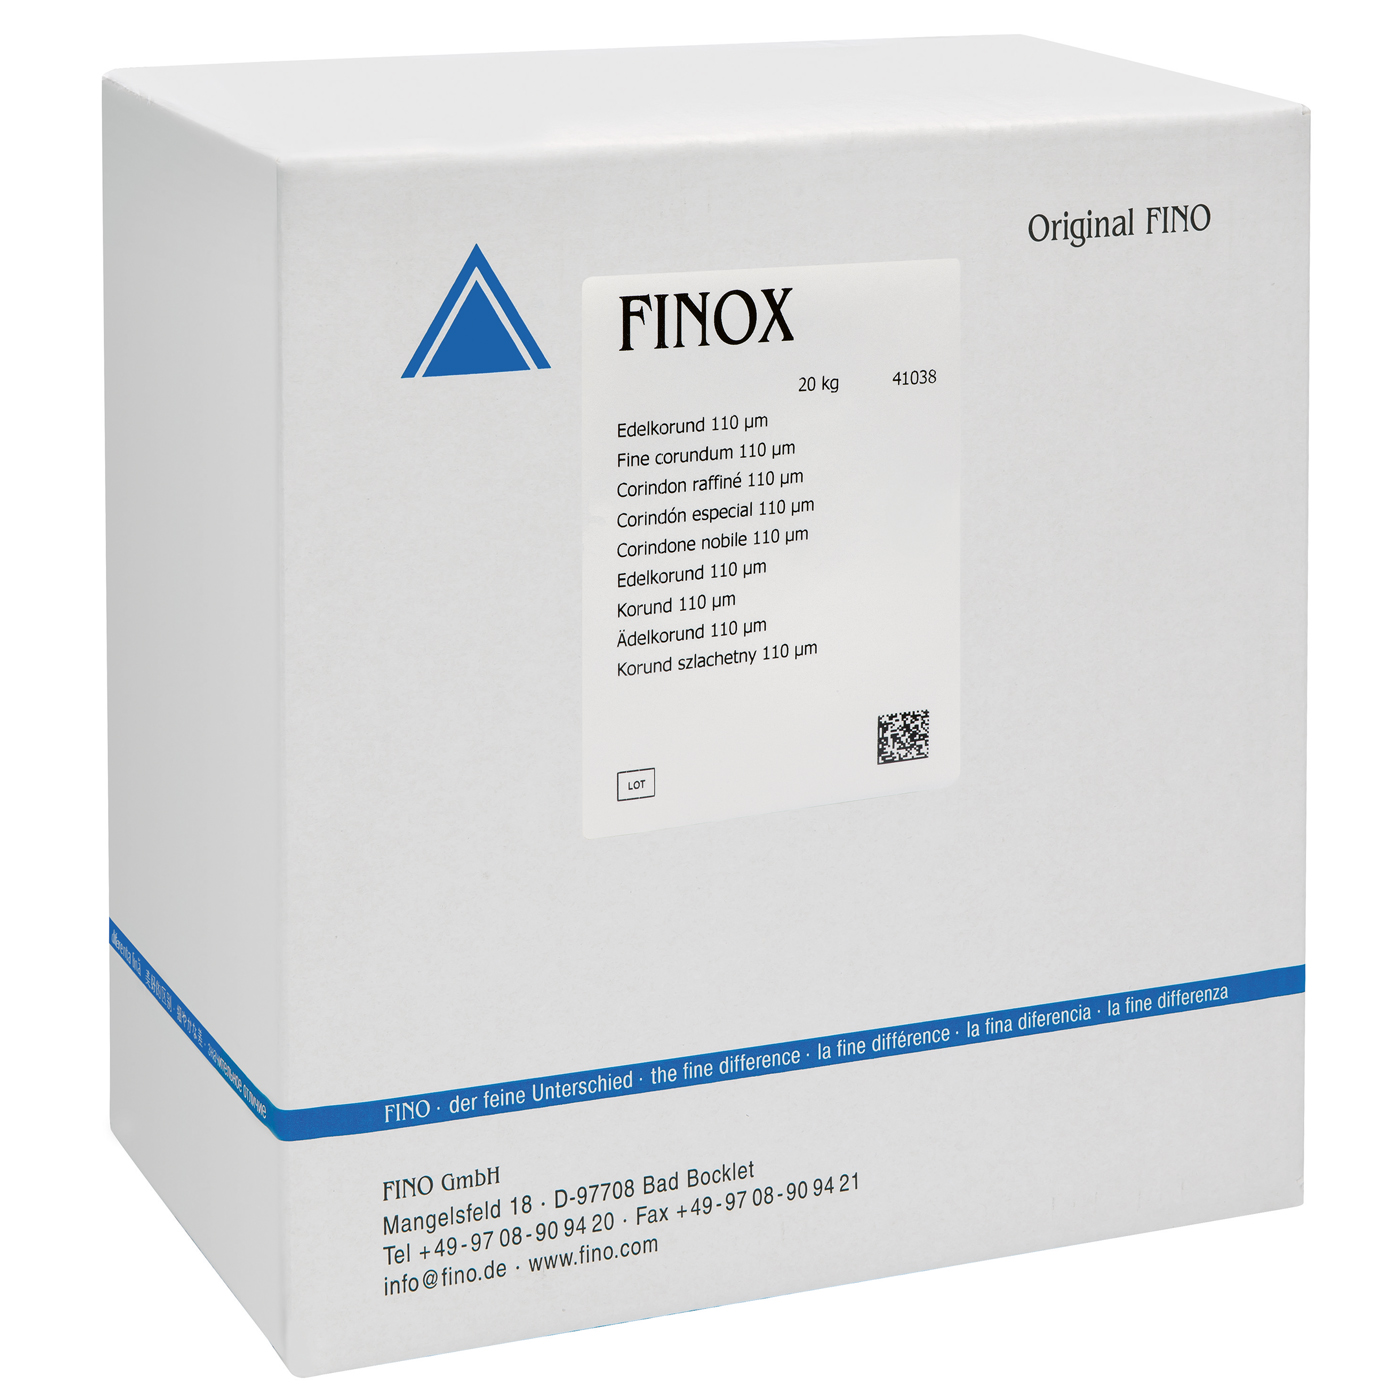 FINOX High-Grade Corundum, 110 µm - 20 kg